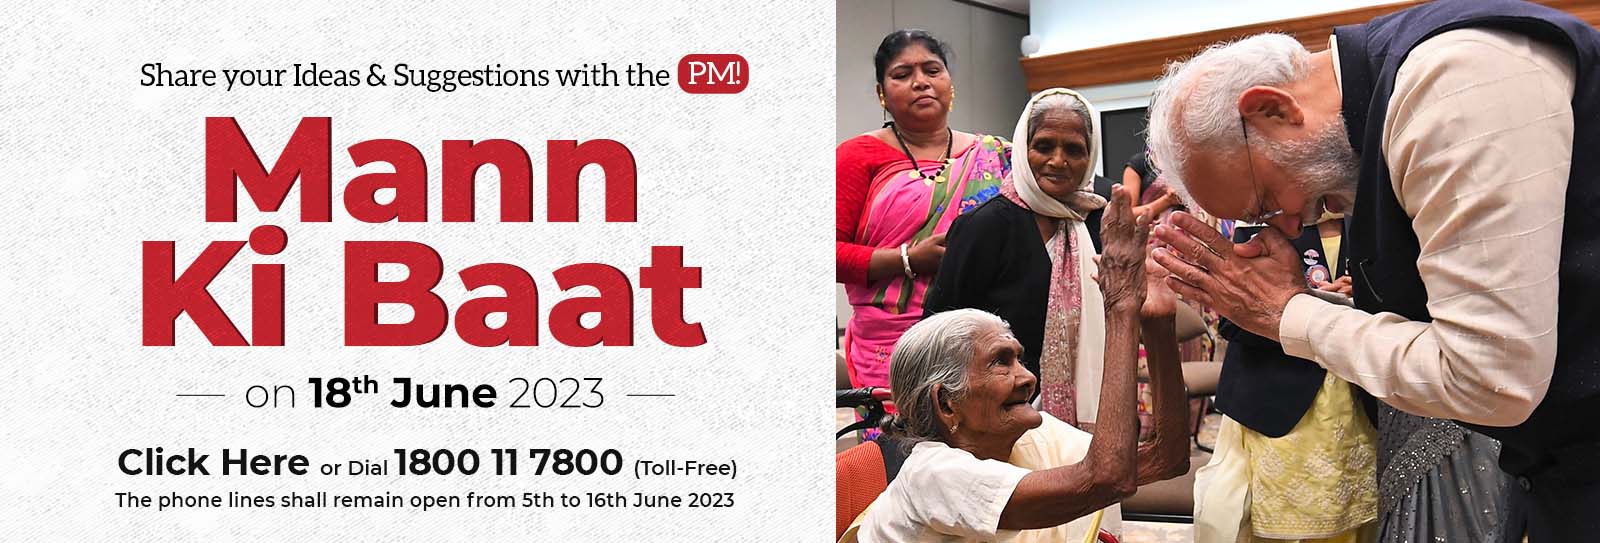 Inviting ideas for Mann Ki Baat by Prime Minister Narendra Modi on 18th June 2023